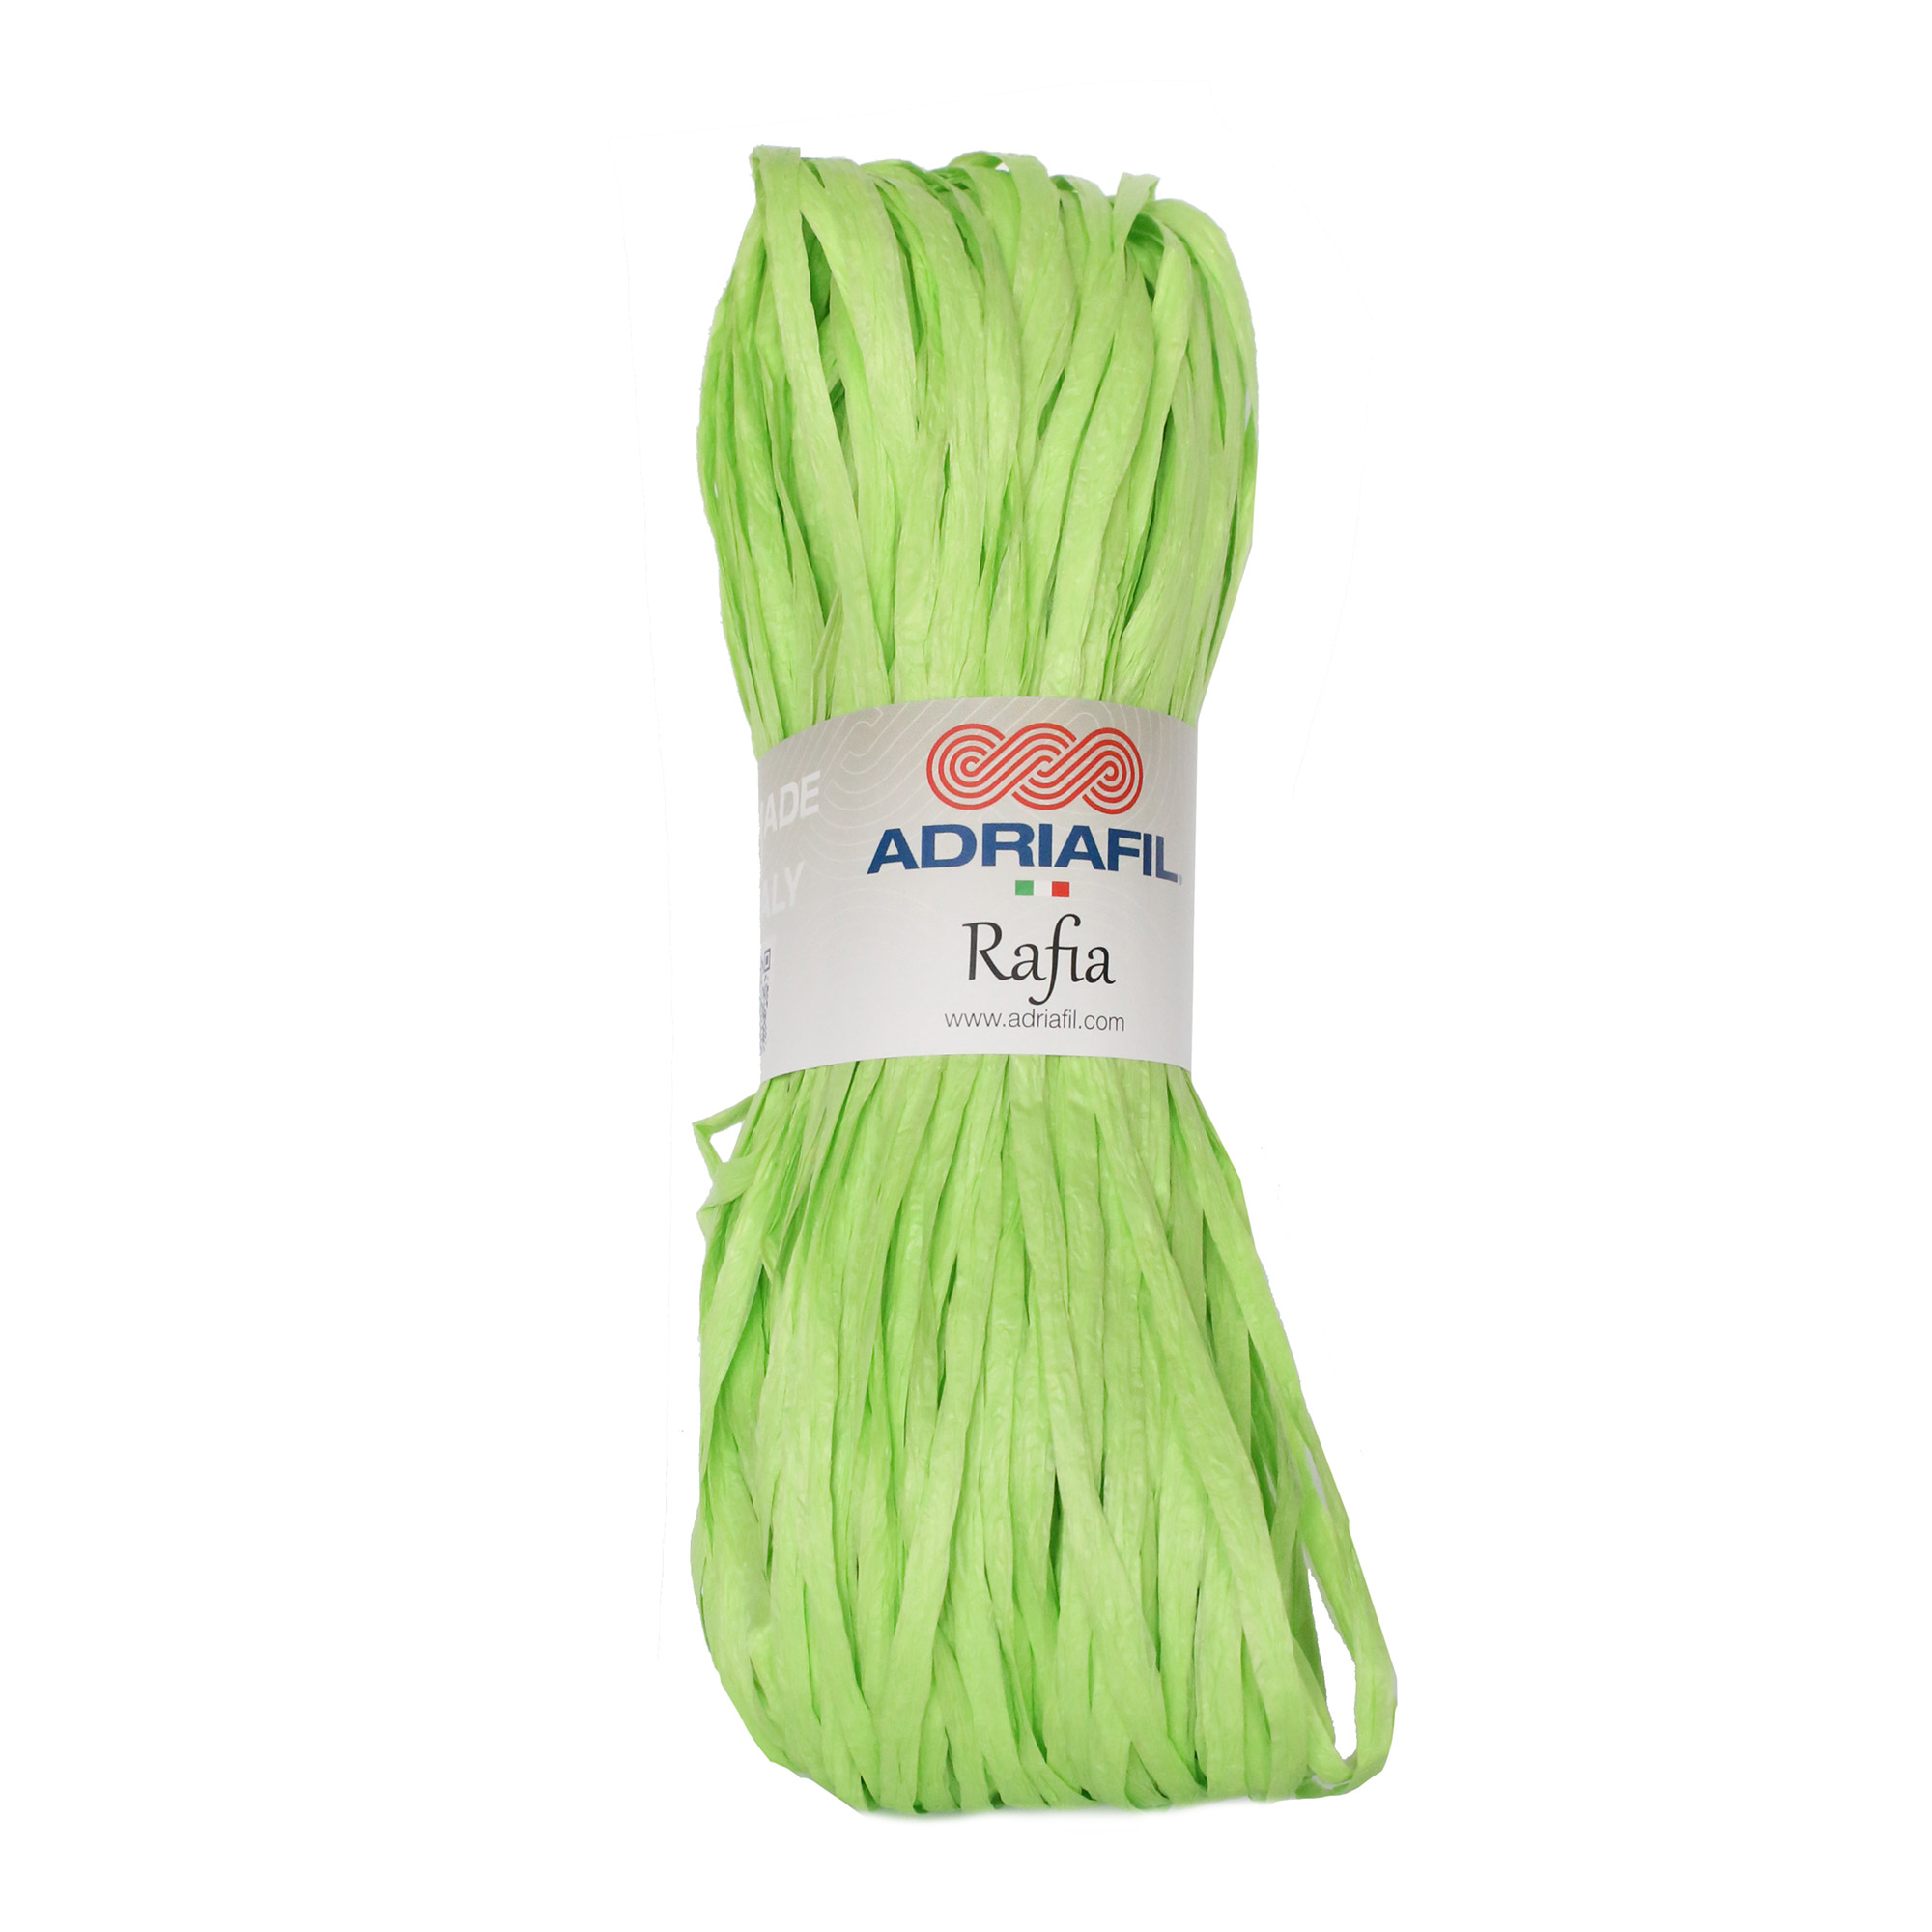 Rafia - Adriafil - 77 verde pisello